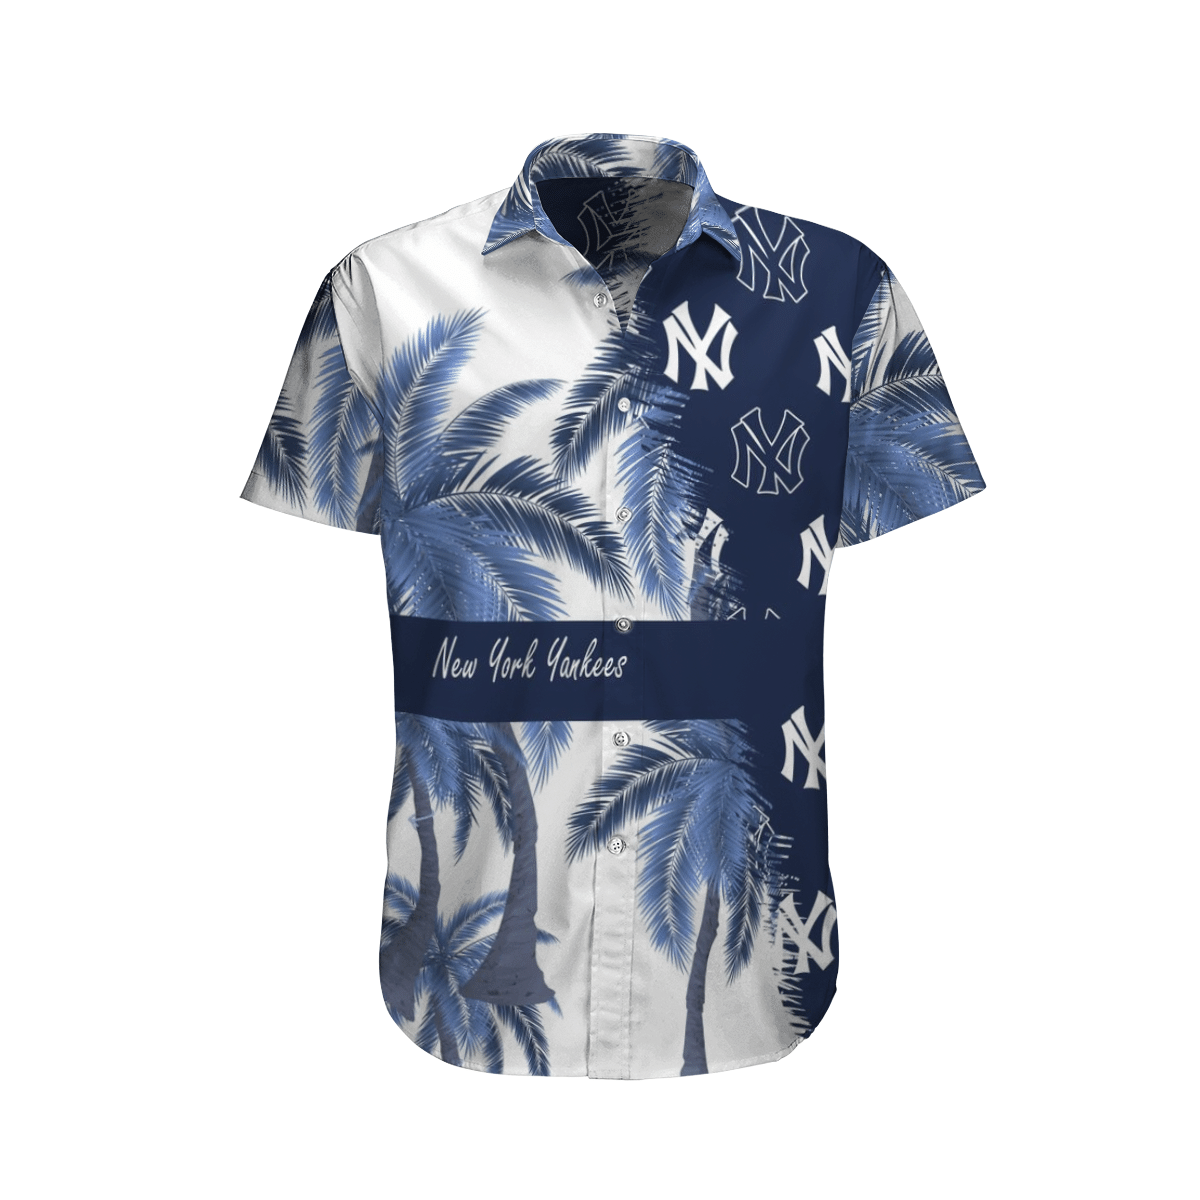 New York Yankees Hawaiian shirt